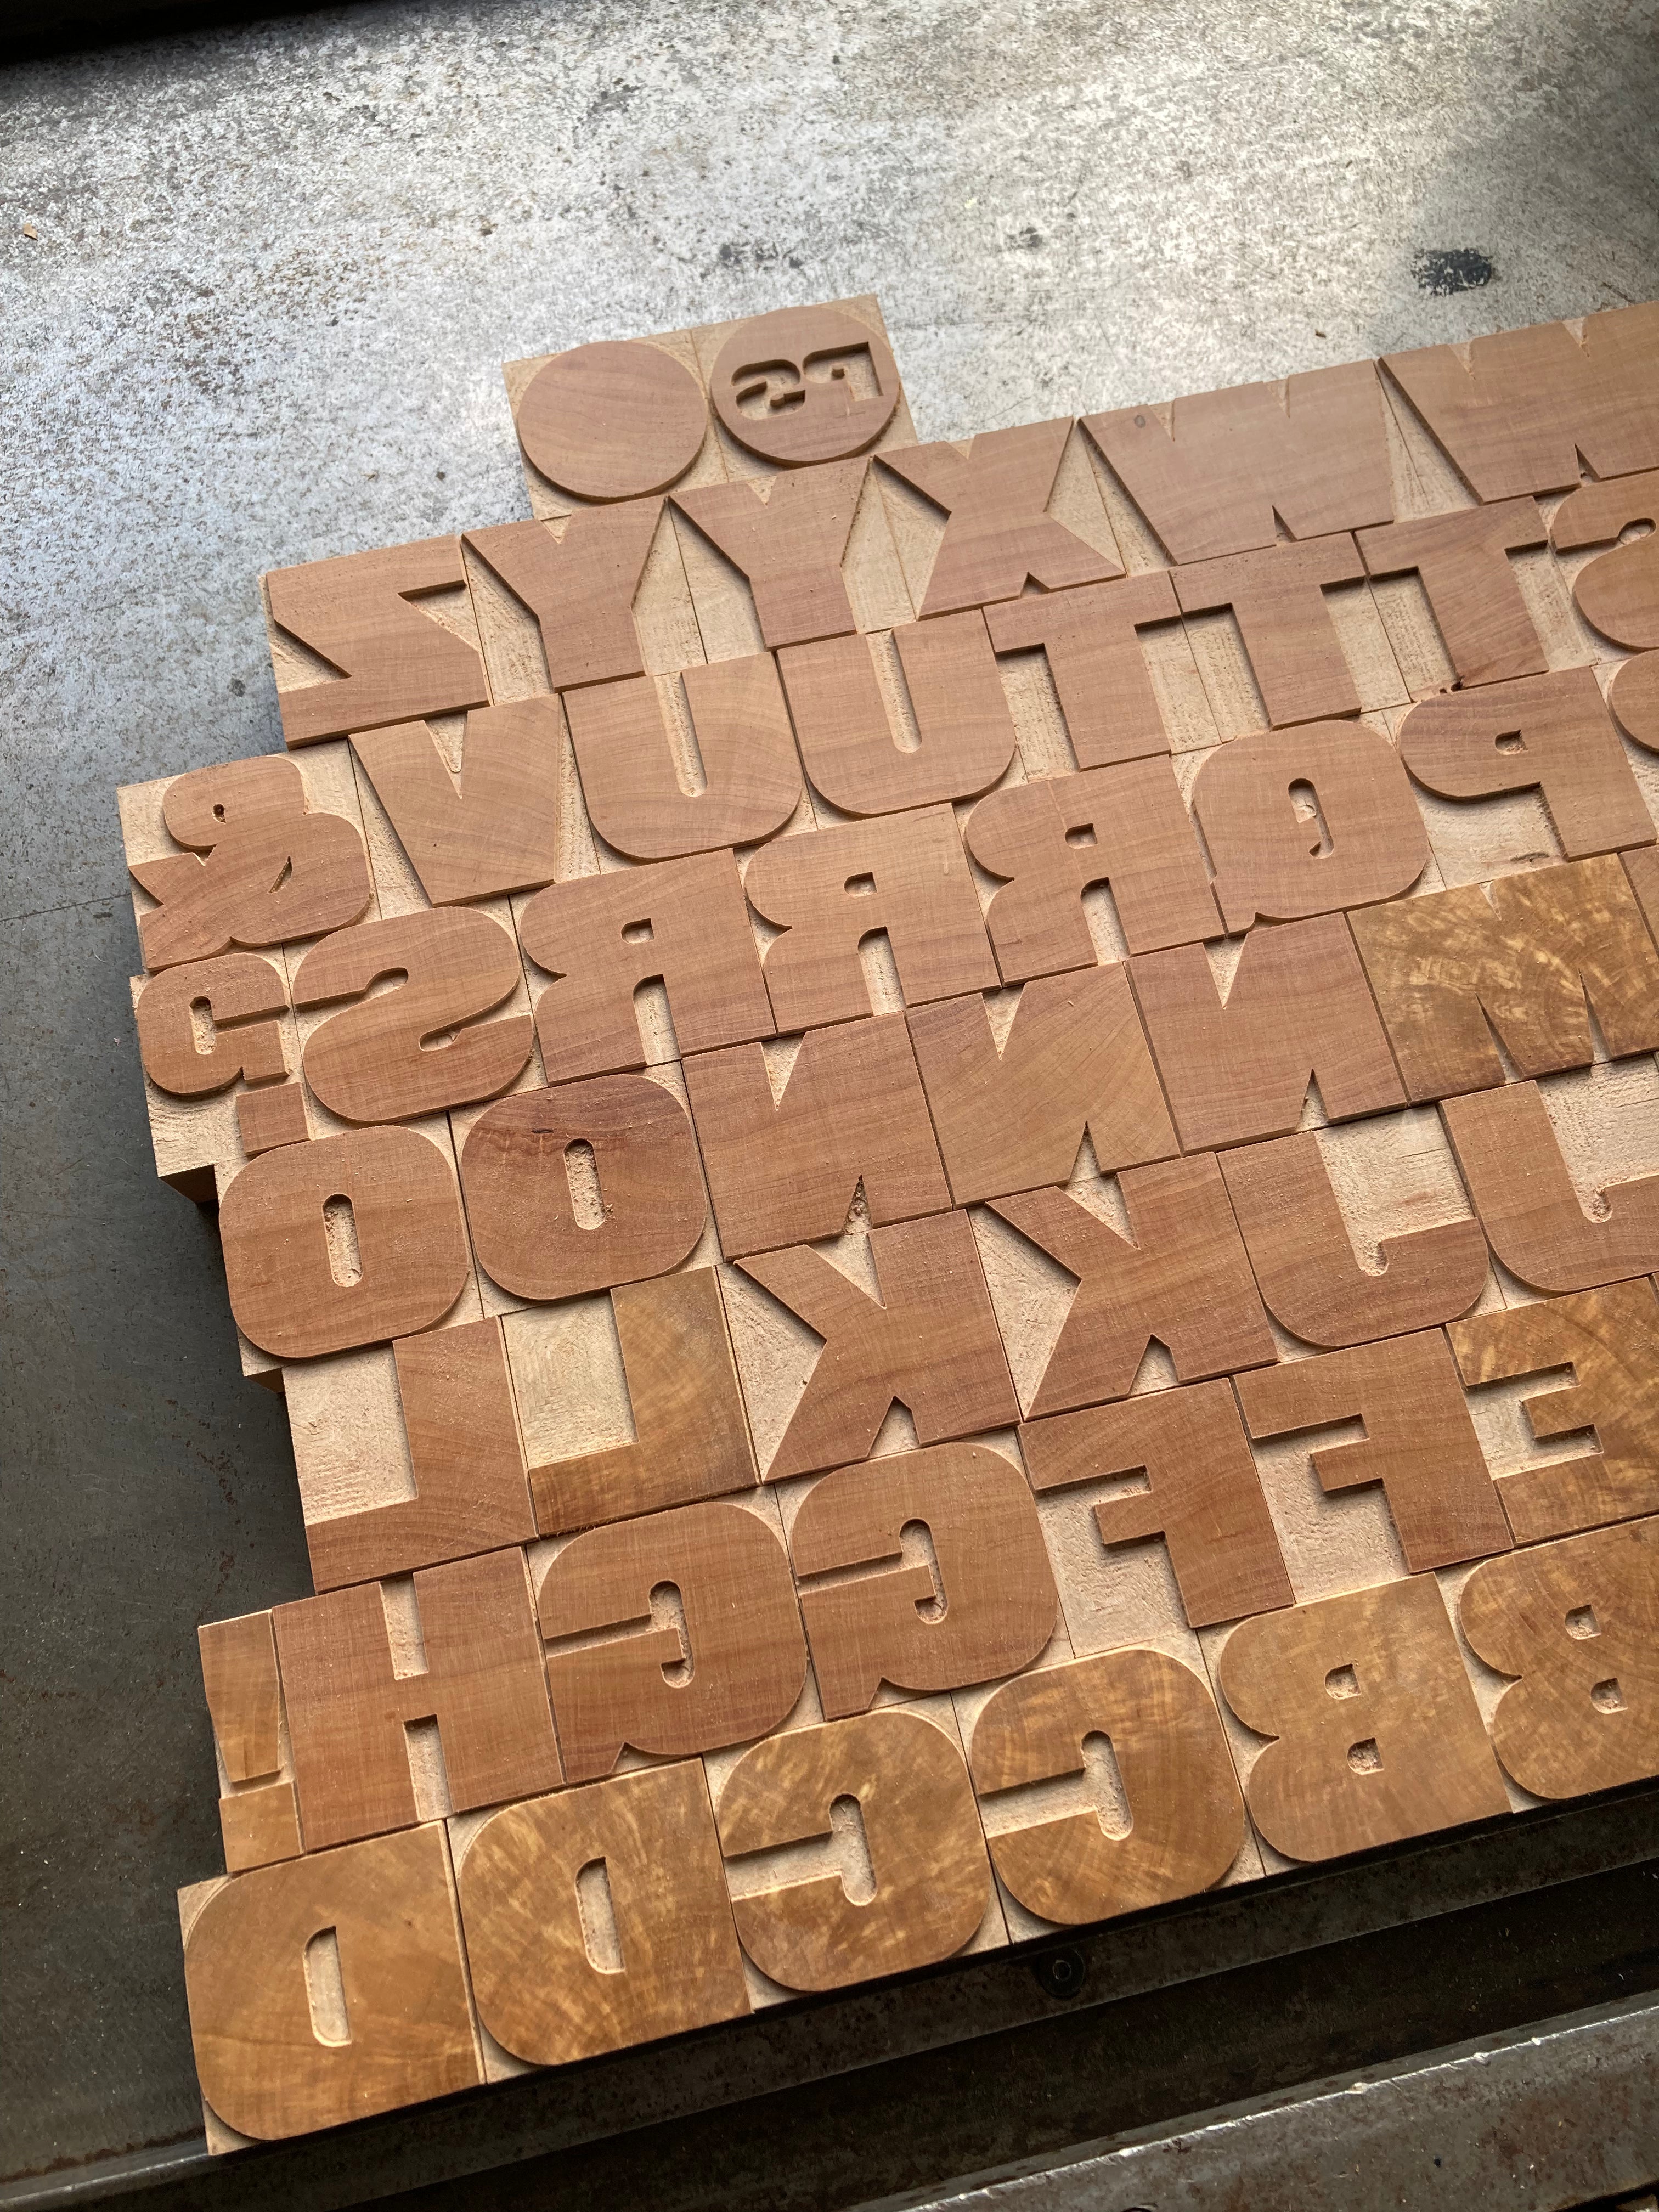 'Meuse' letterpress woodtype typeface